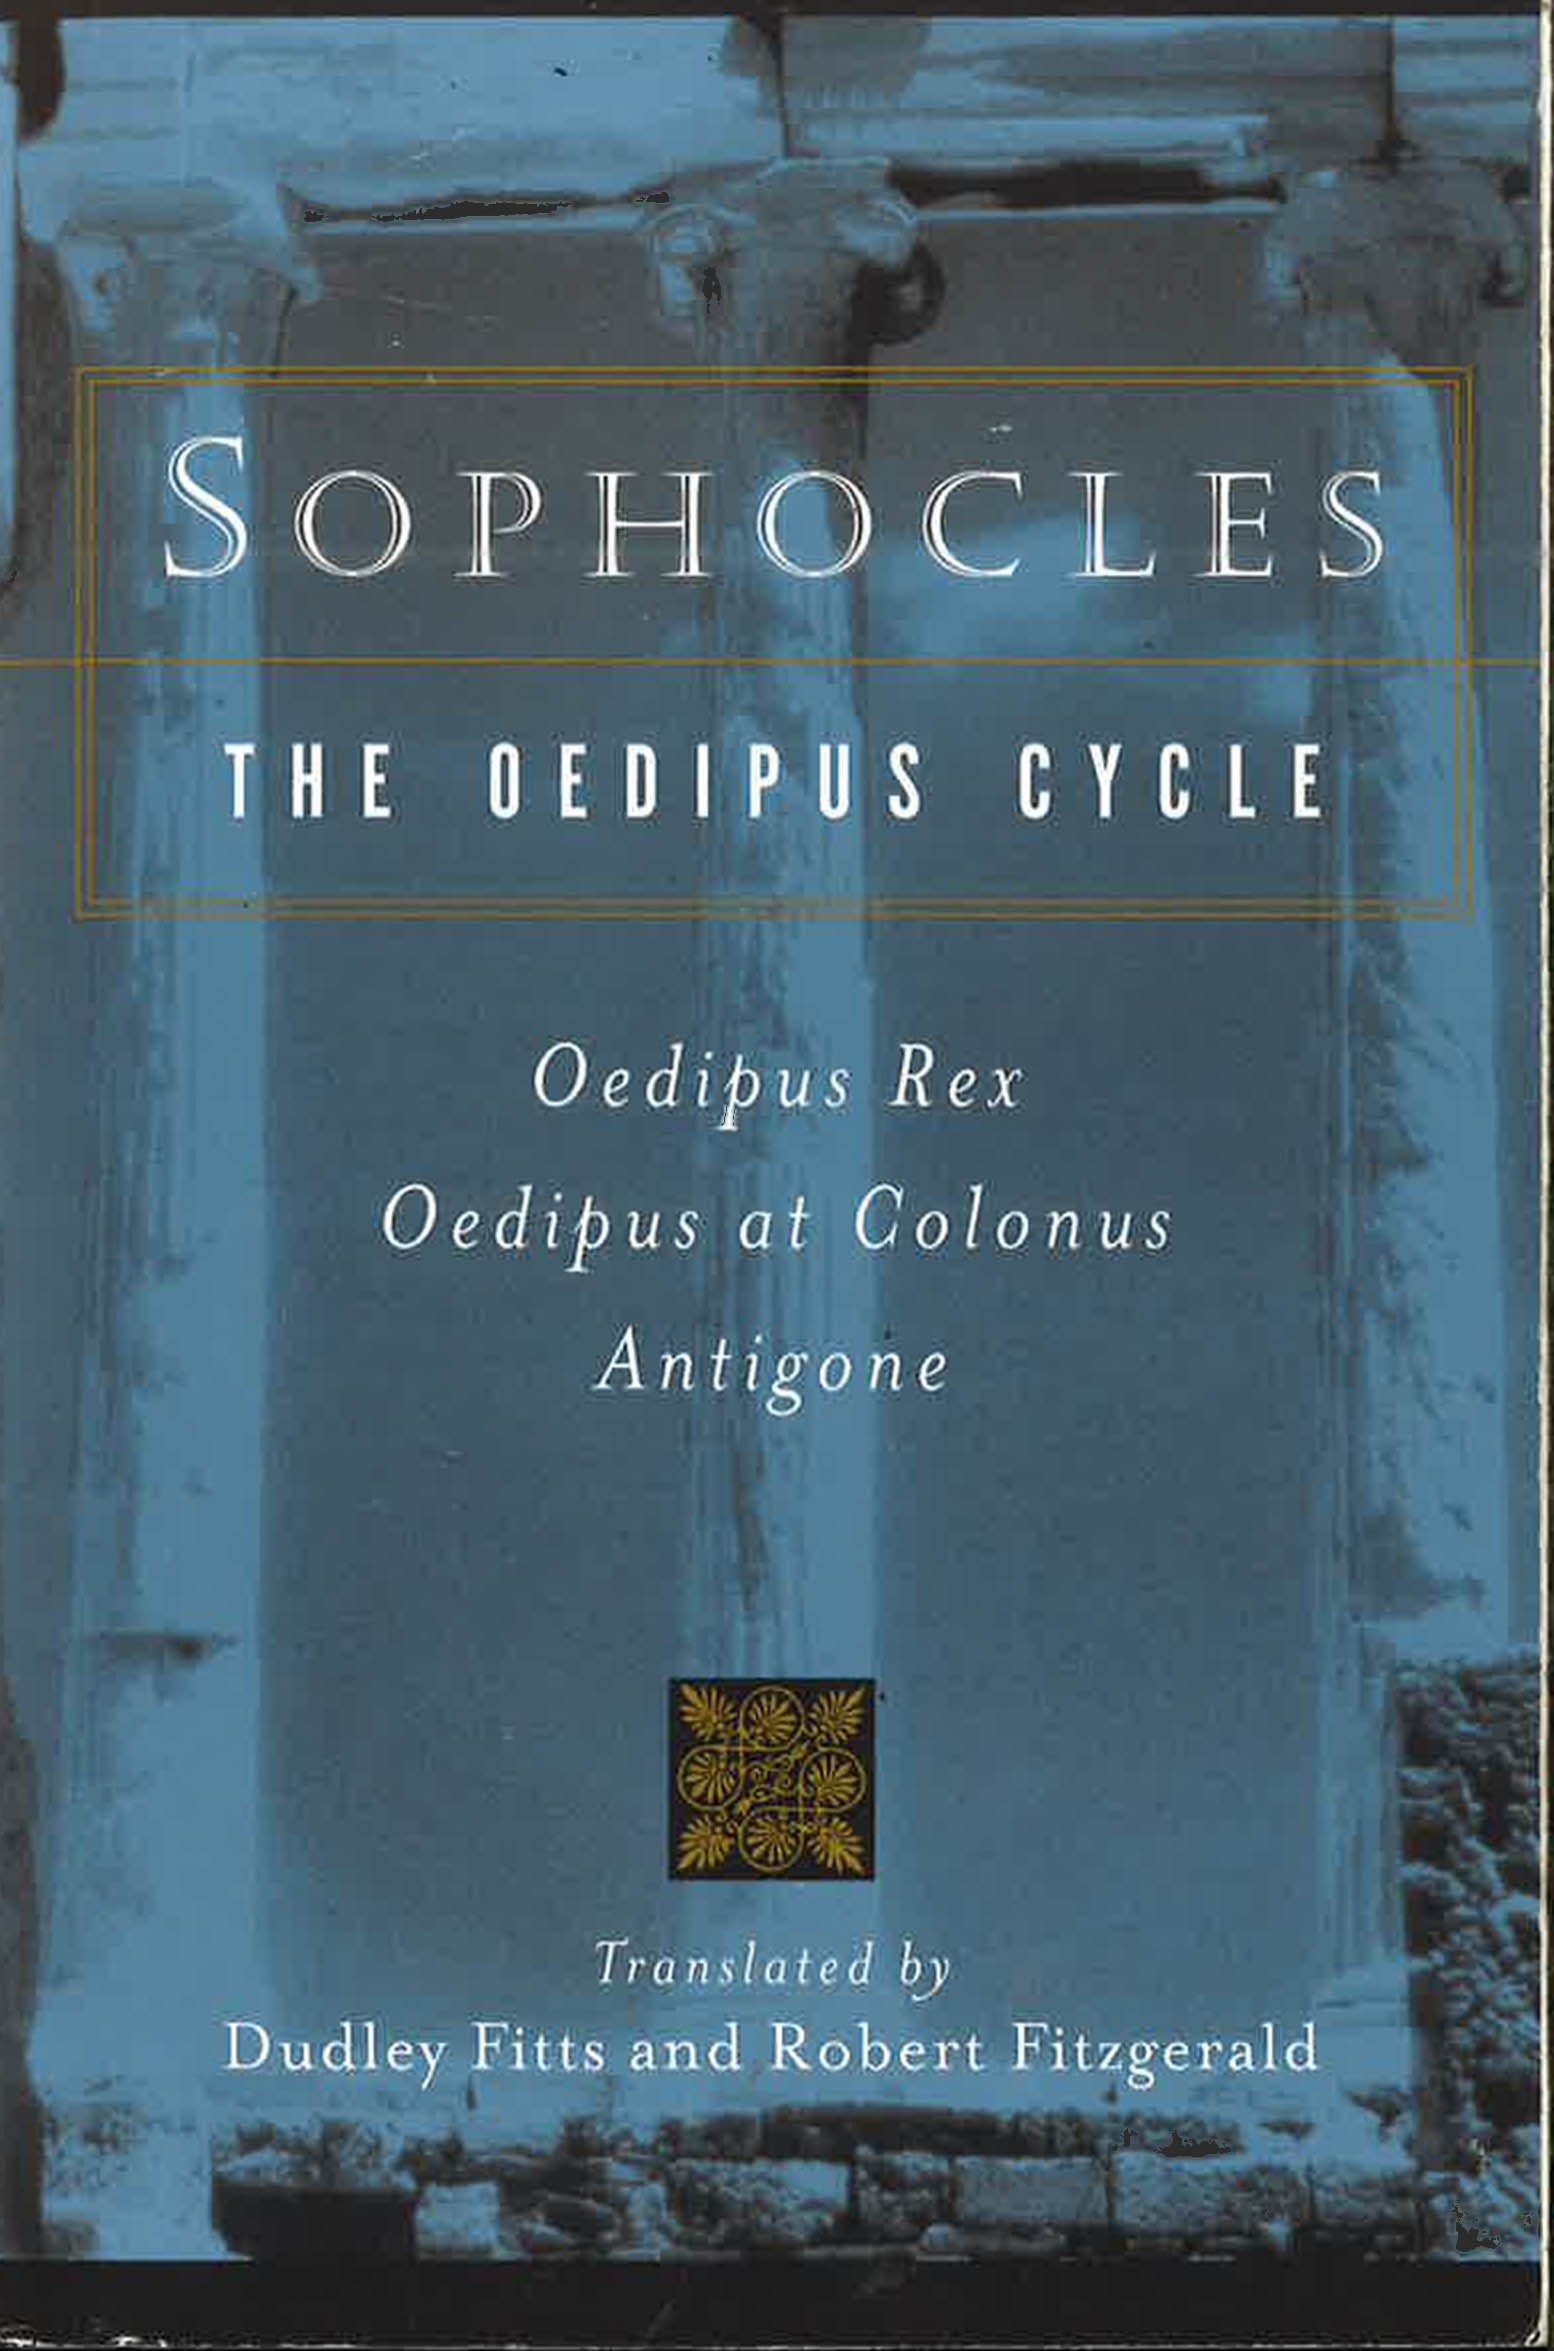 oedipus at colonus characters